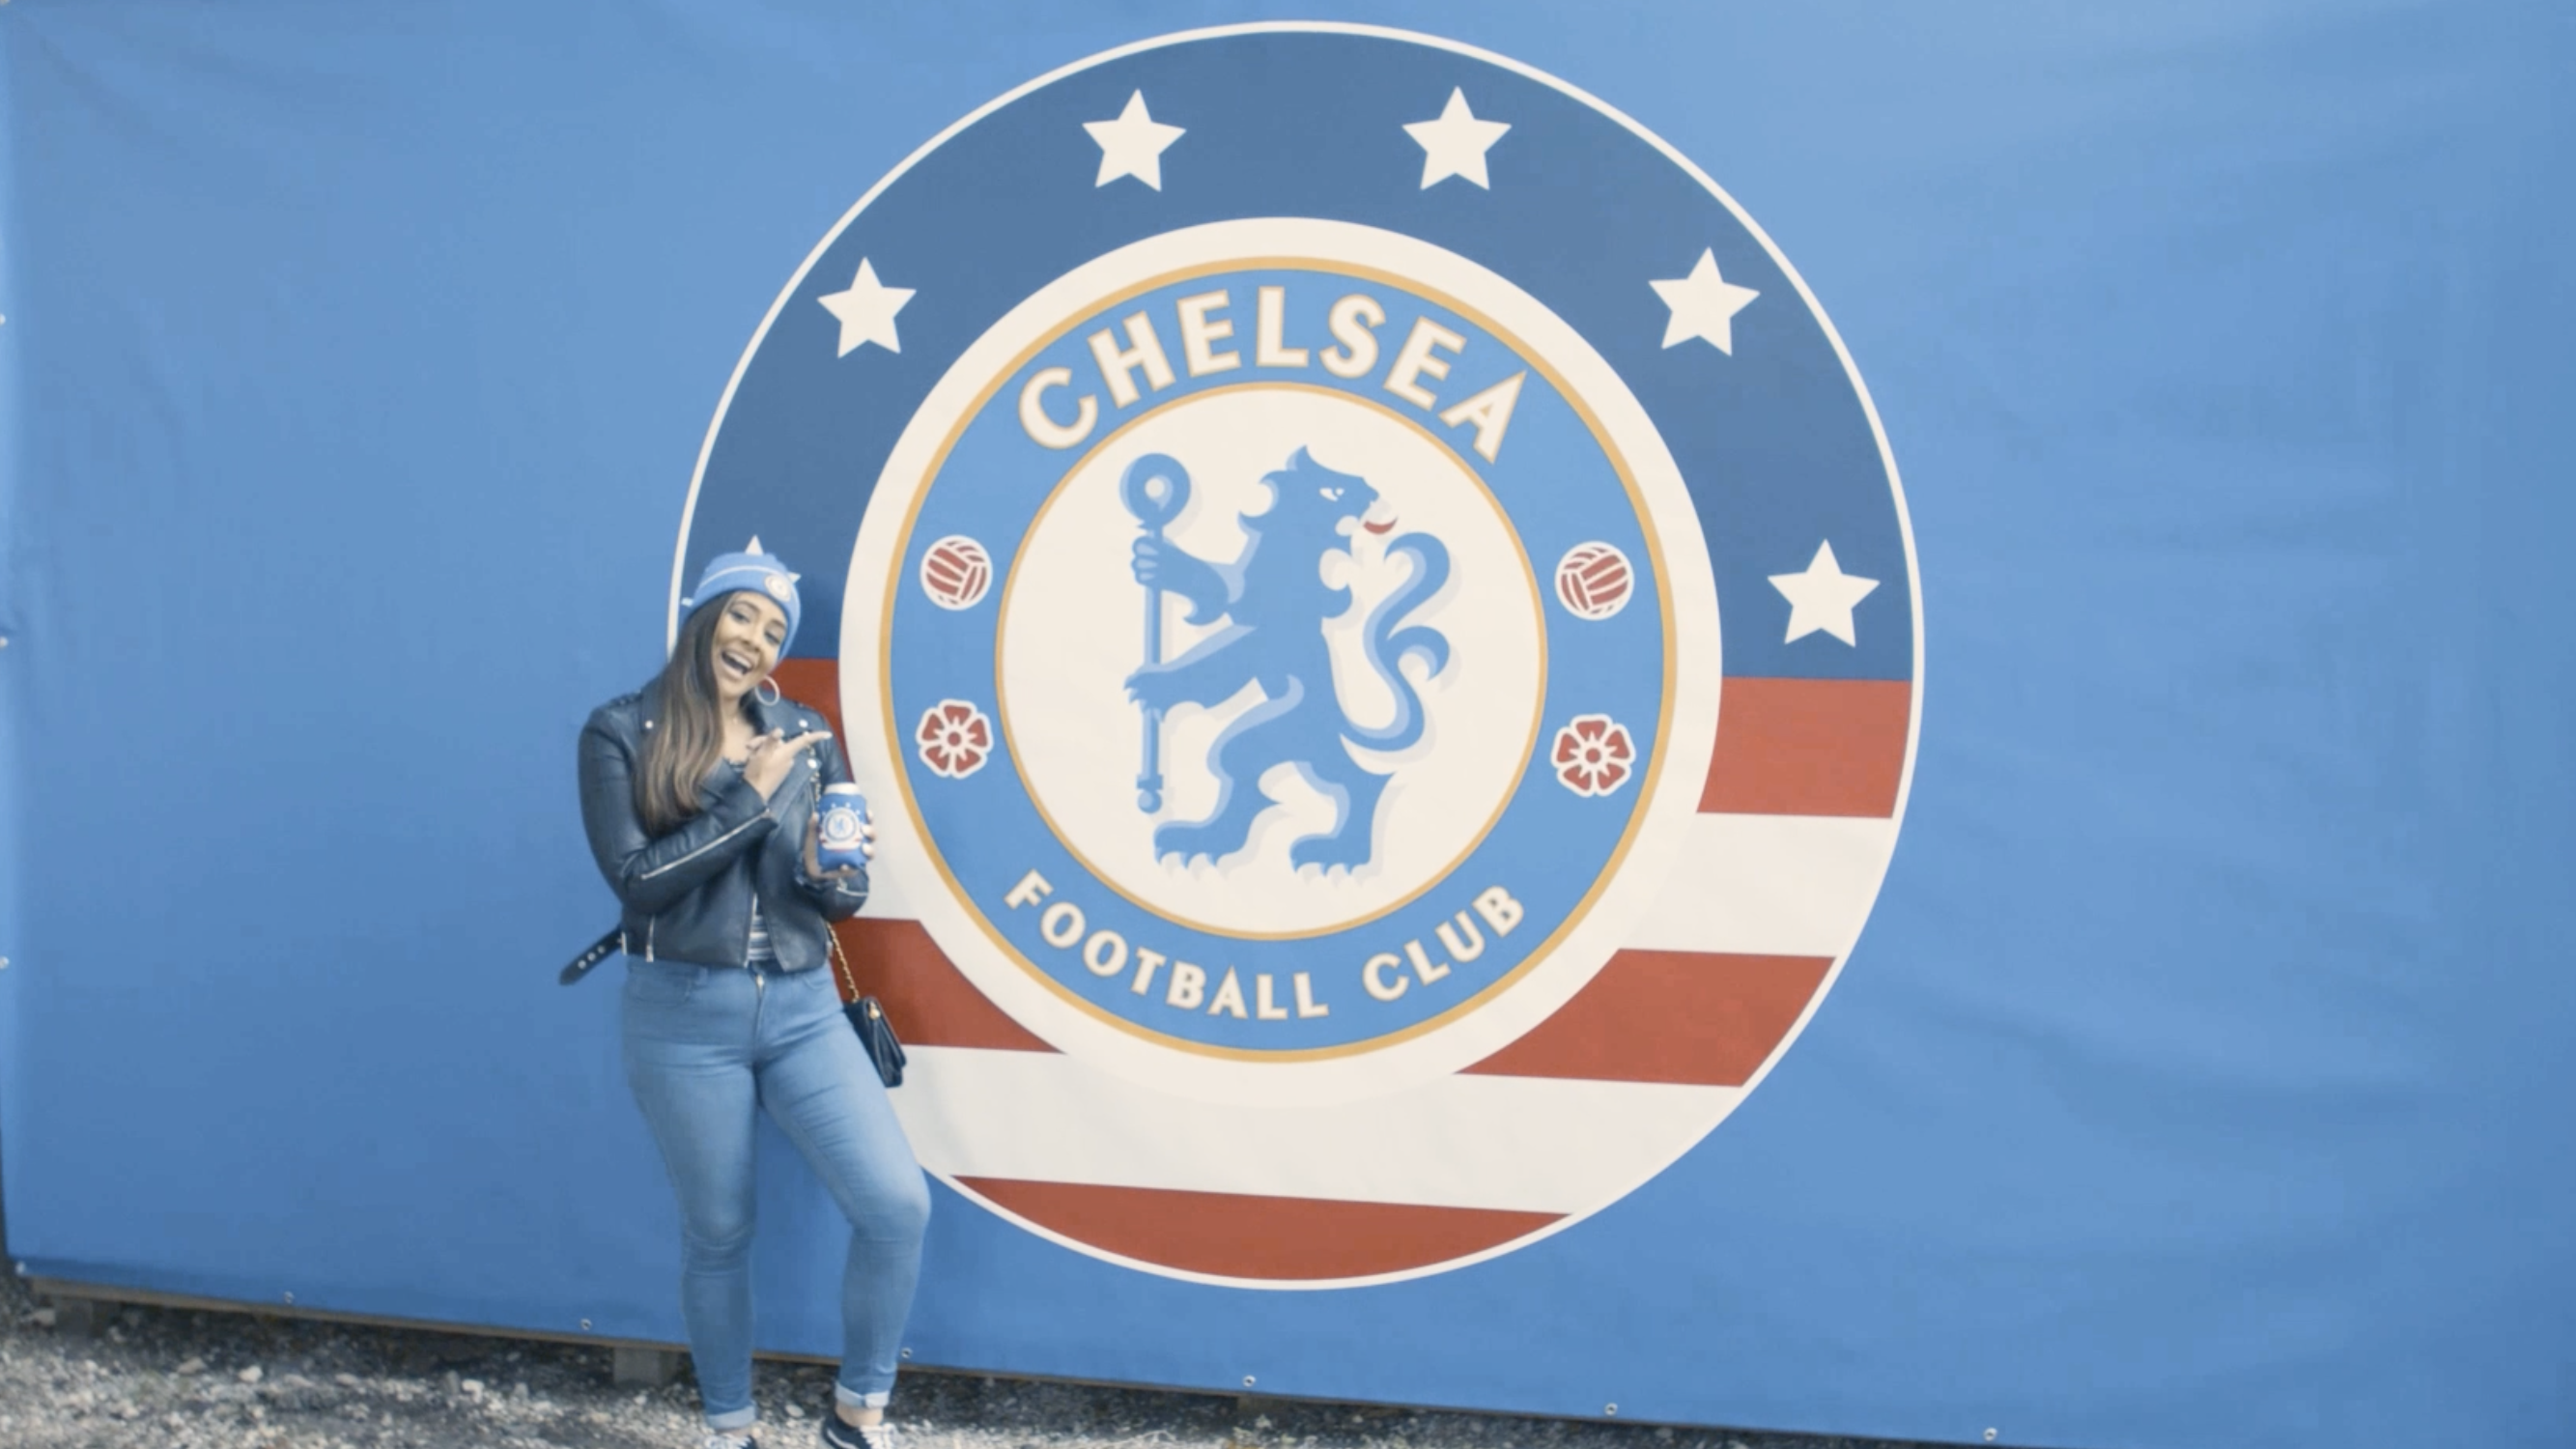 File:Chelsea F.C. Pride of London Flag (5986806627).jpg - Wikimedia Commons